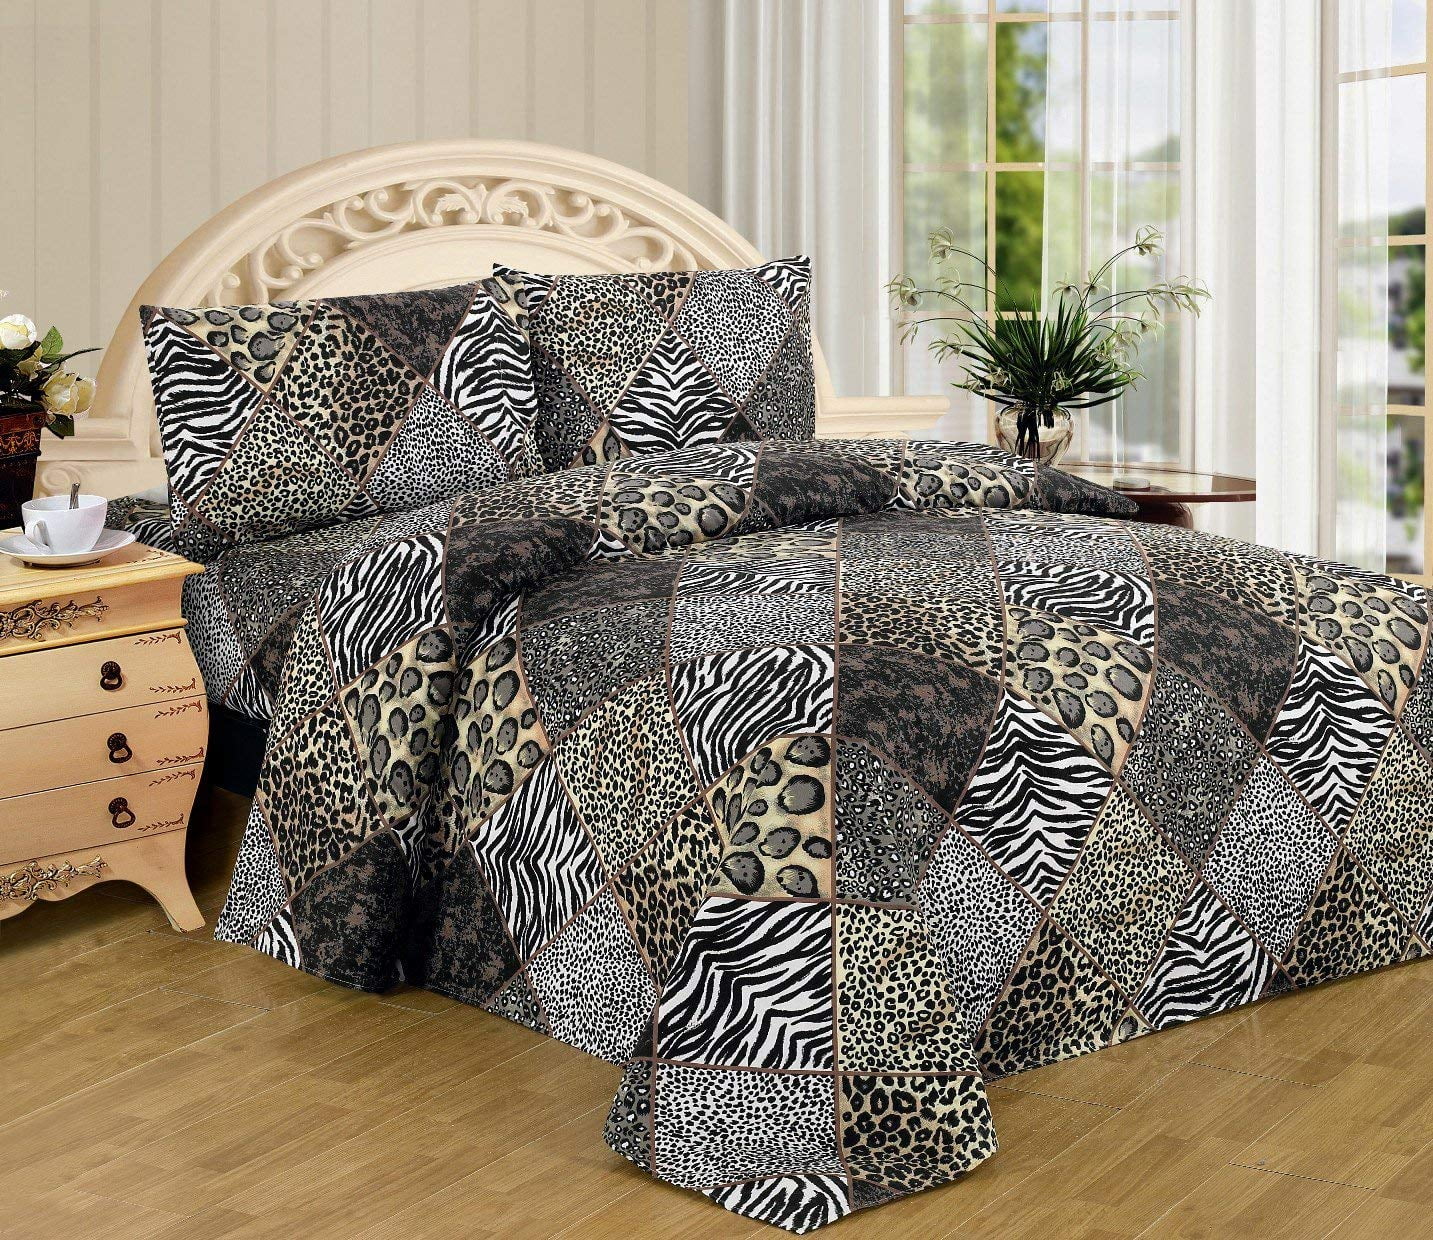 Black and white leopard print bedding